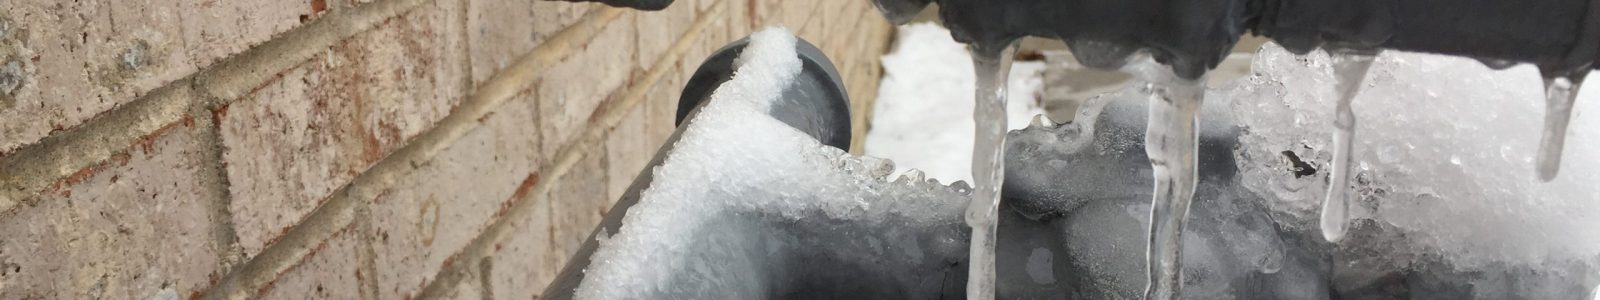 Frozen Pipe Water Damage Restoration – Manchester, NJ